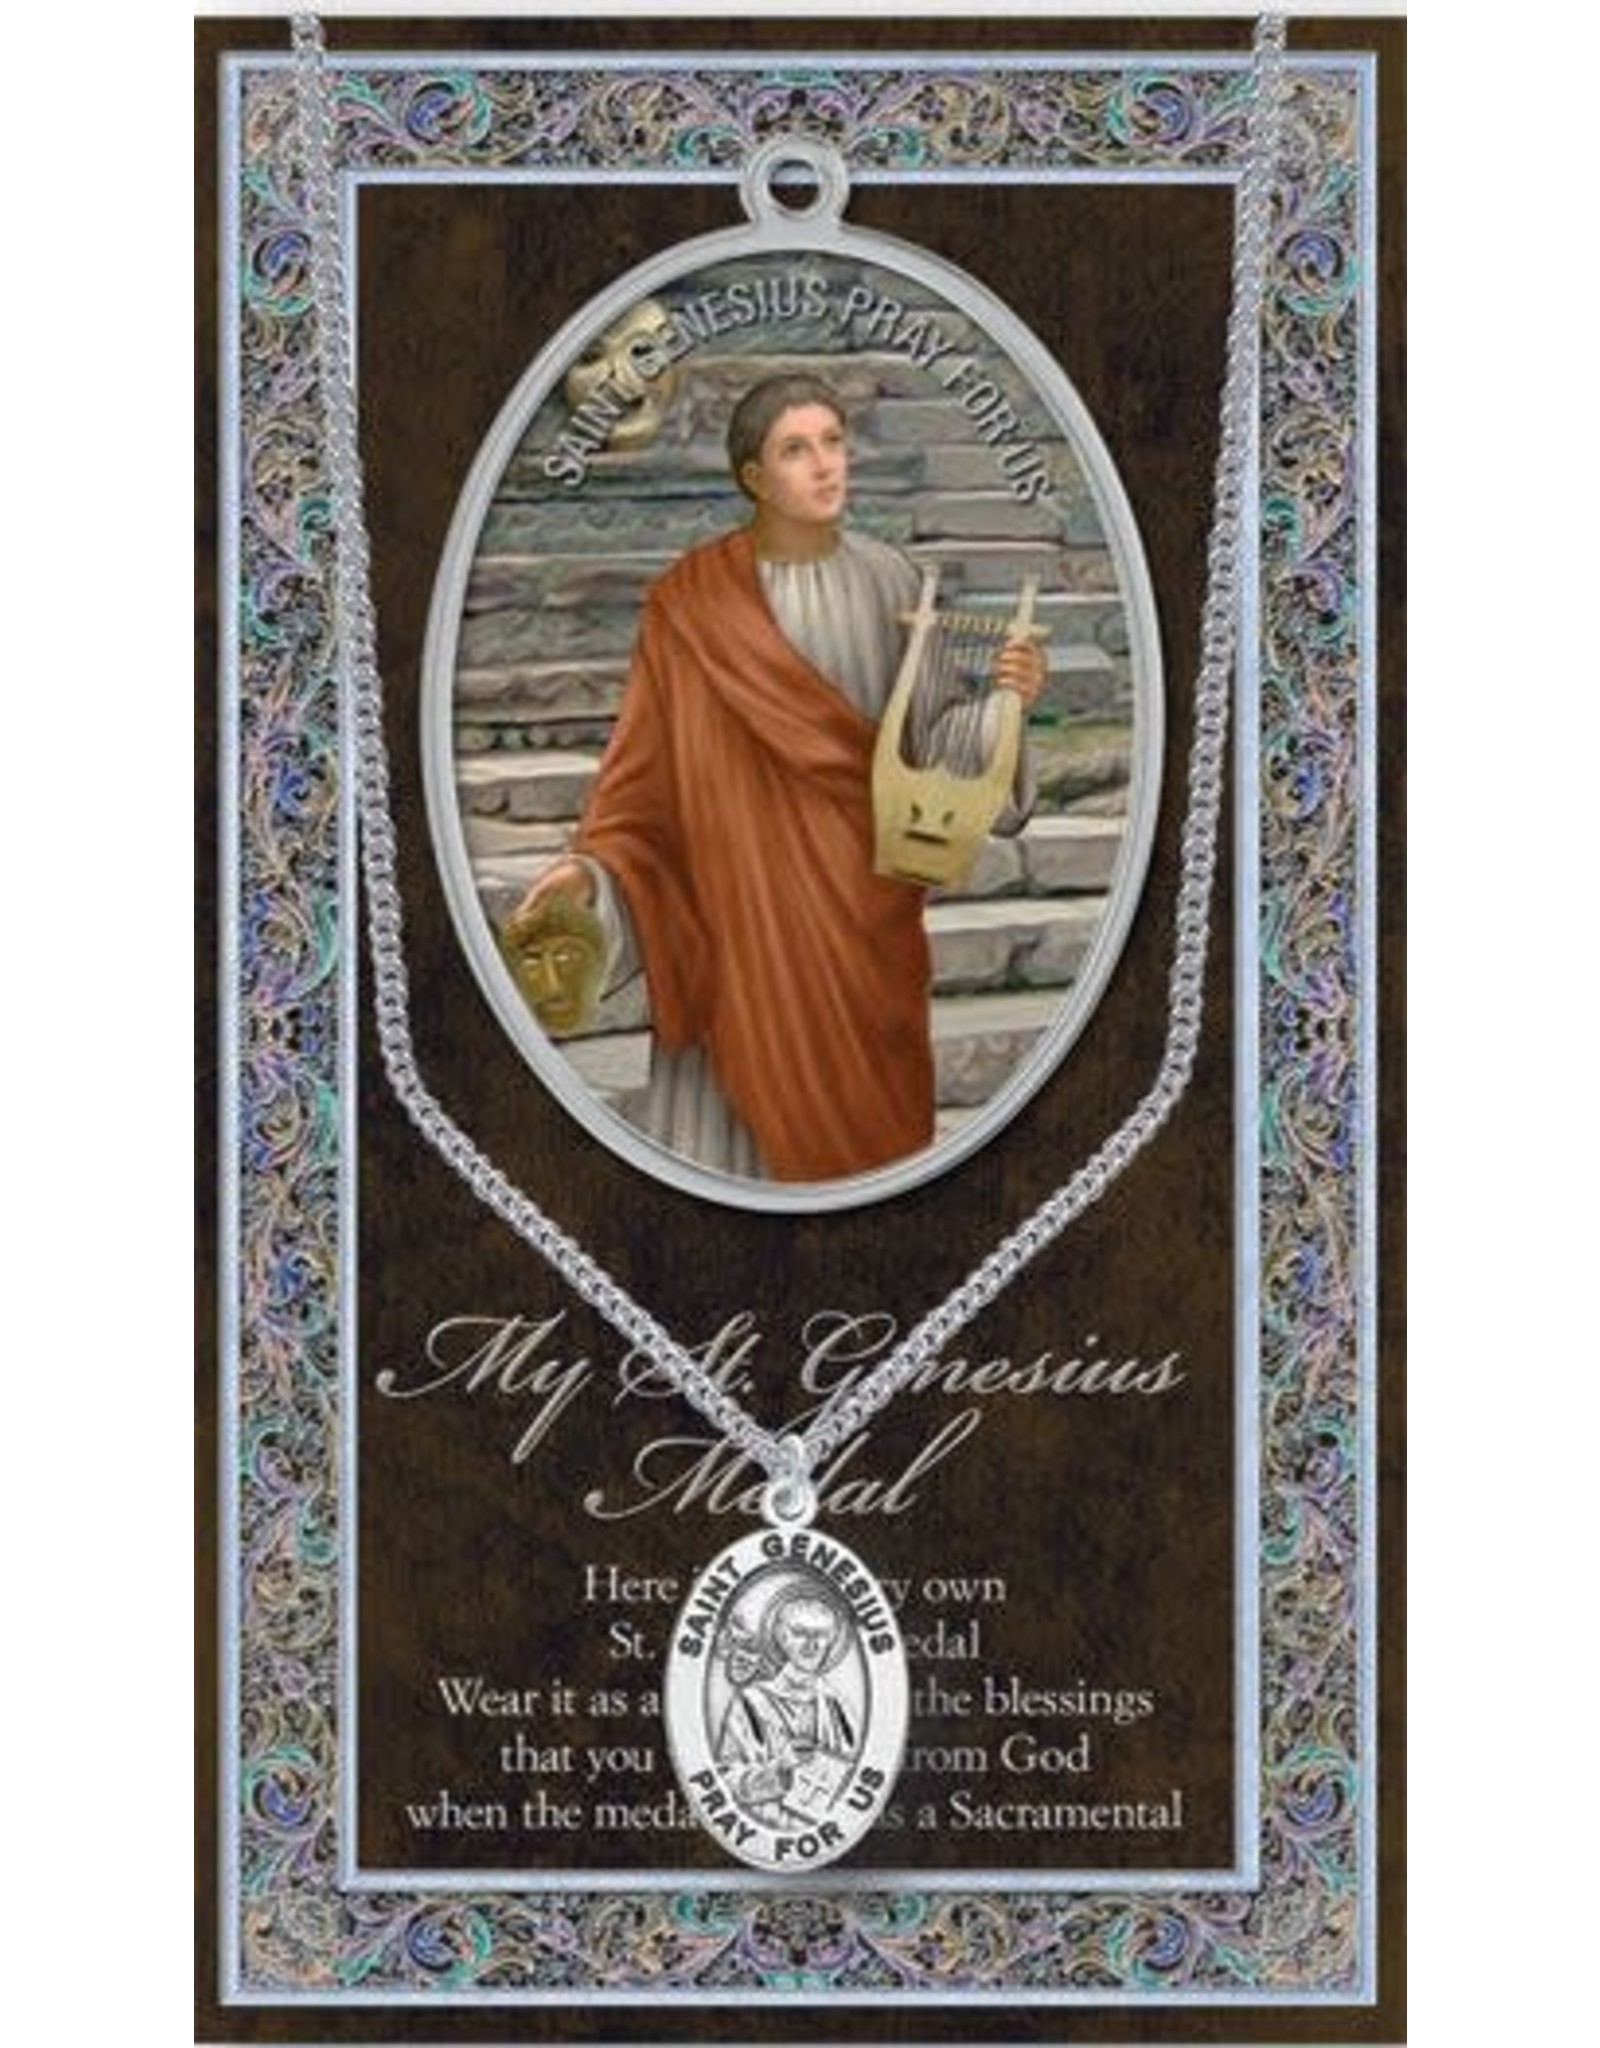 Hirten Saint Medal with Prayer Card - St. Genesius